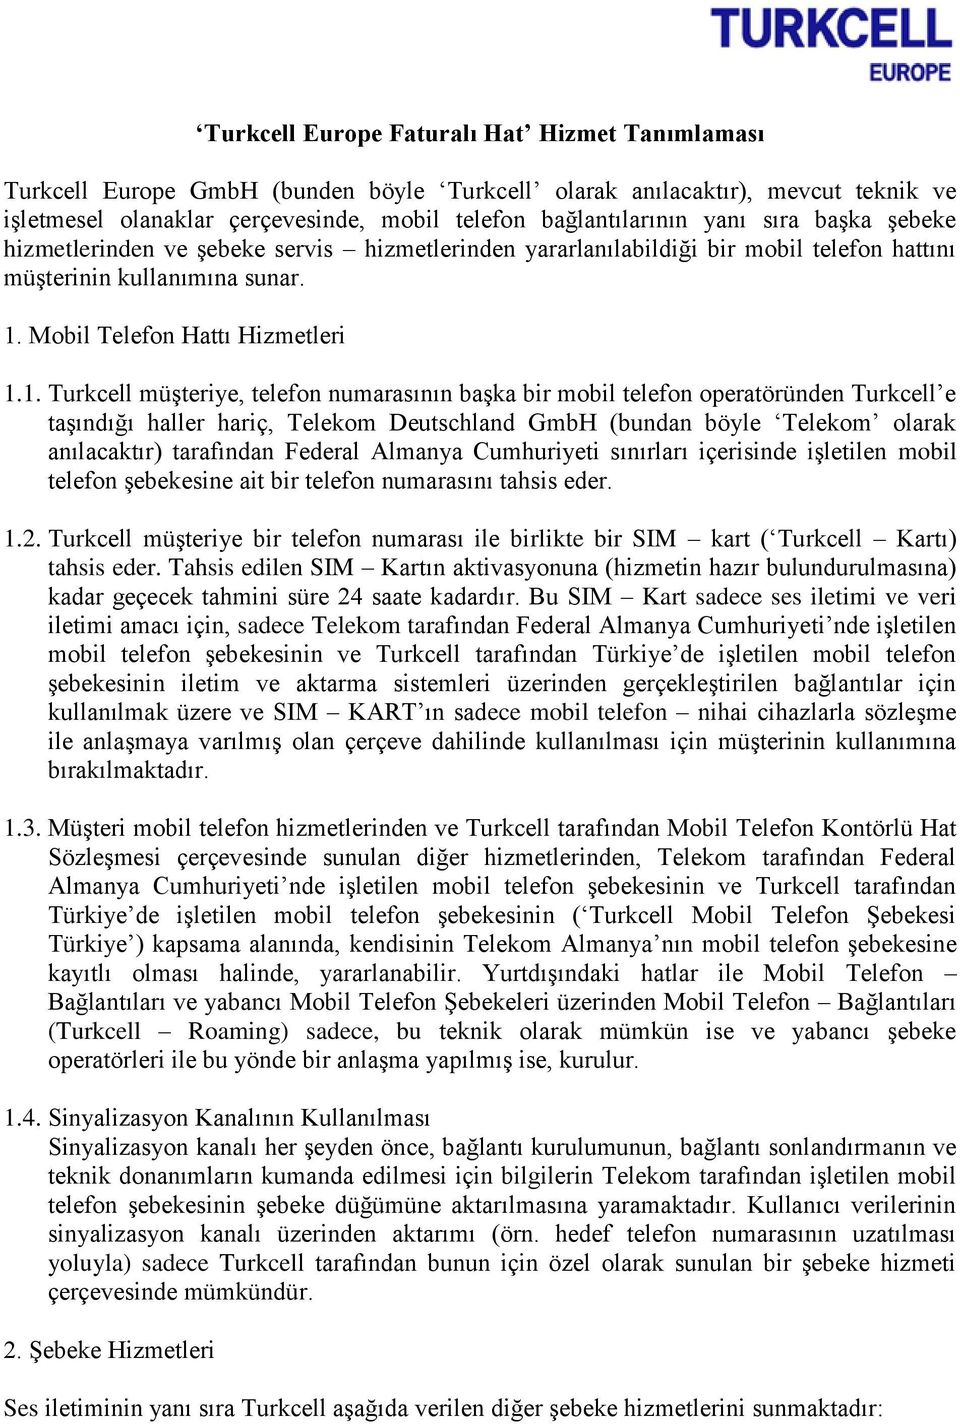 Turkcell Europe Faturalı Hat Hizmet Tanımlaması - PDF Free Download